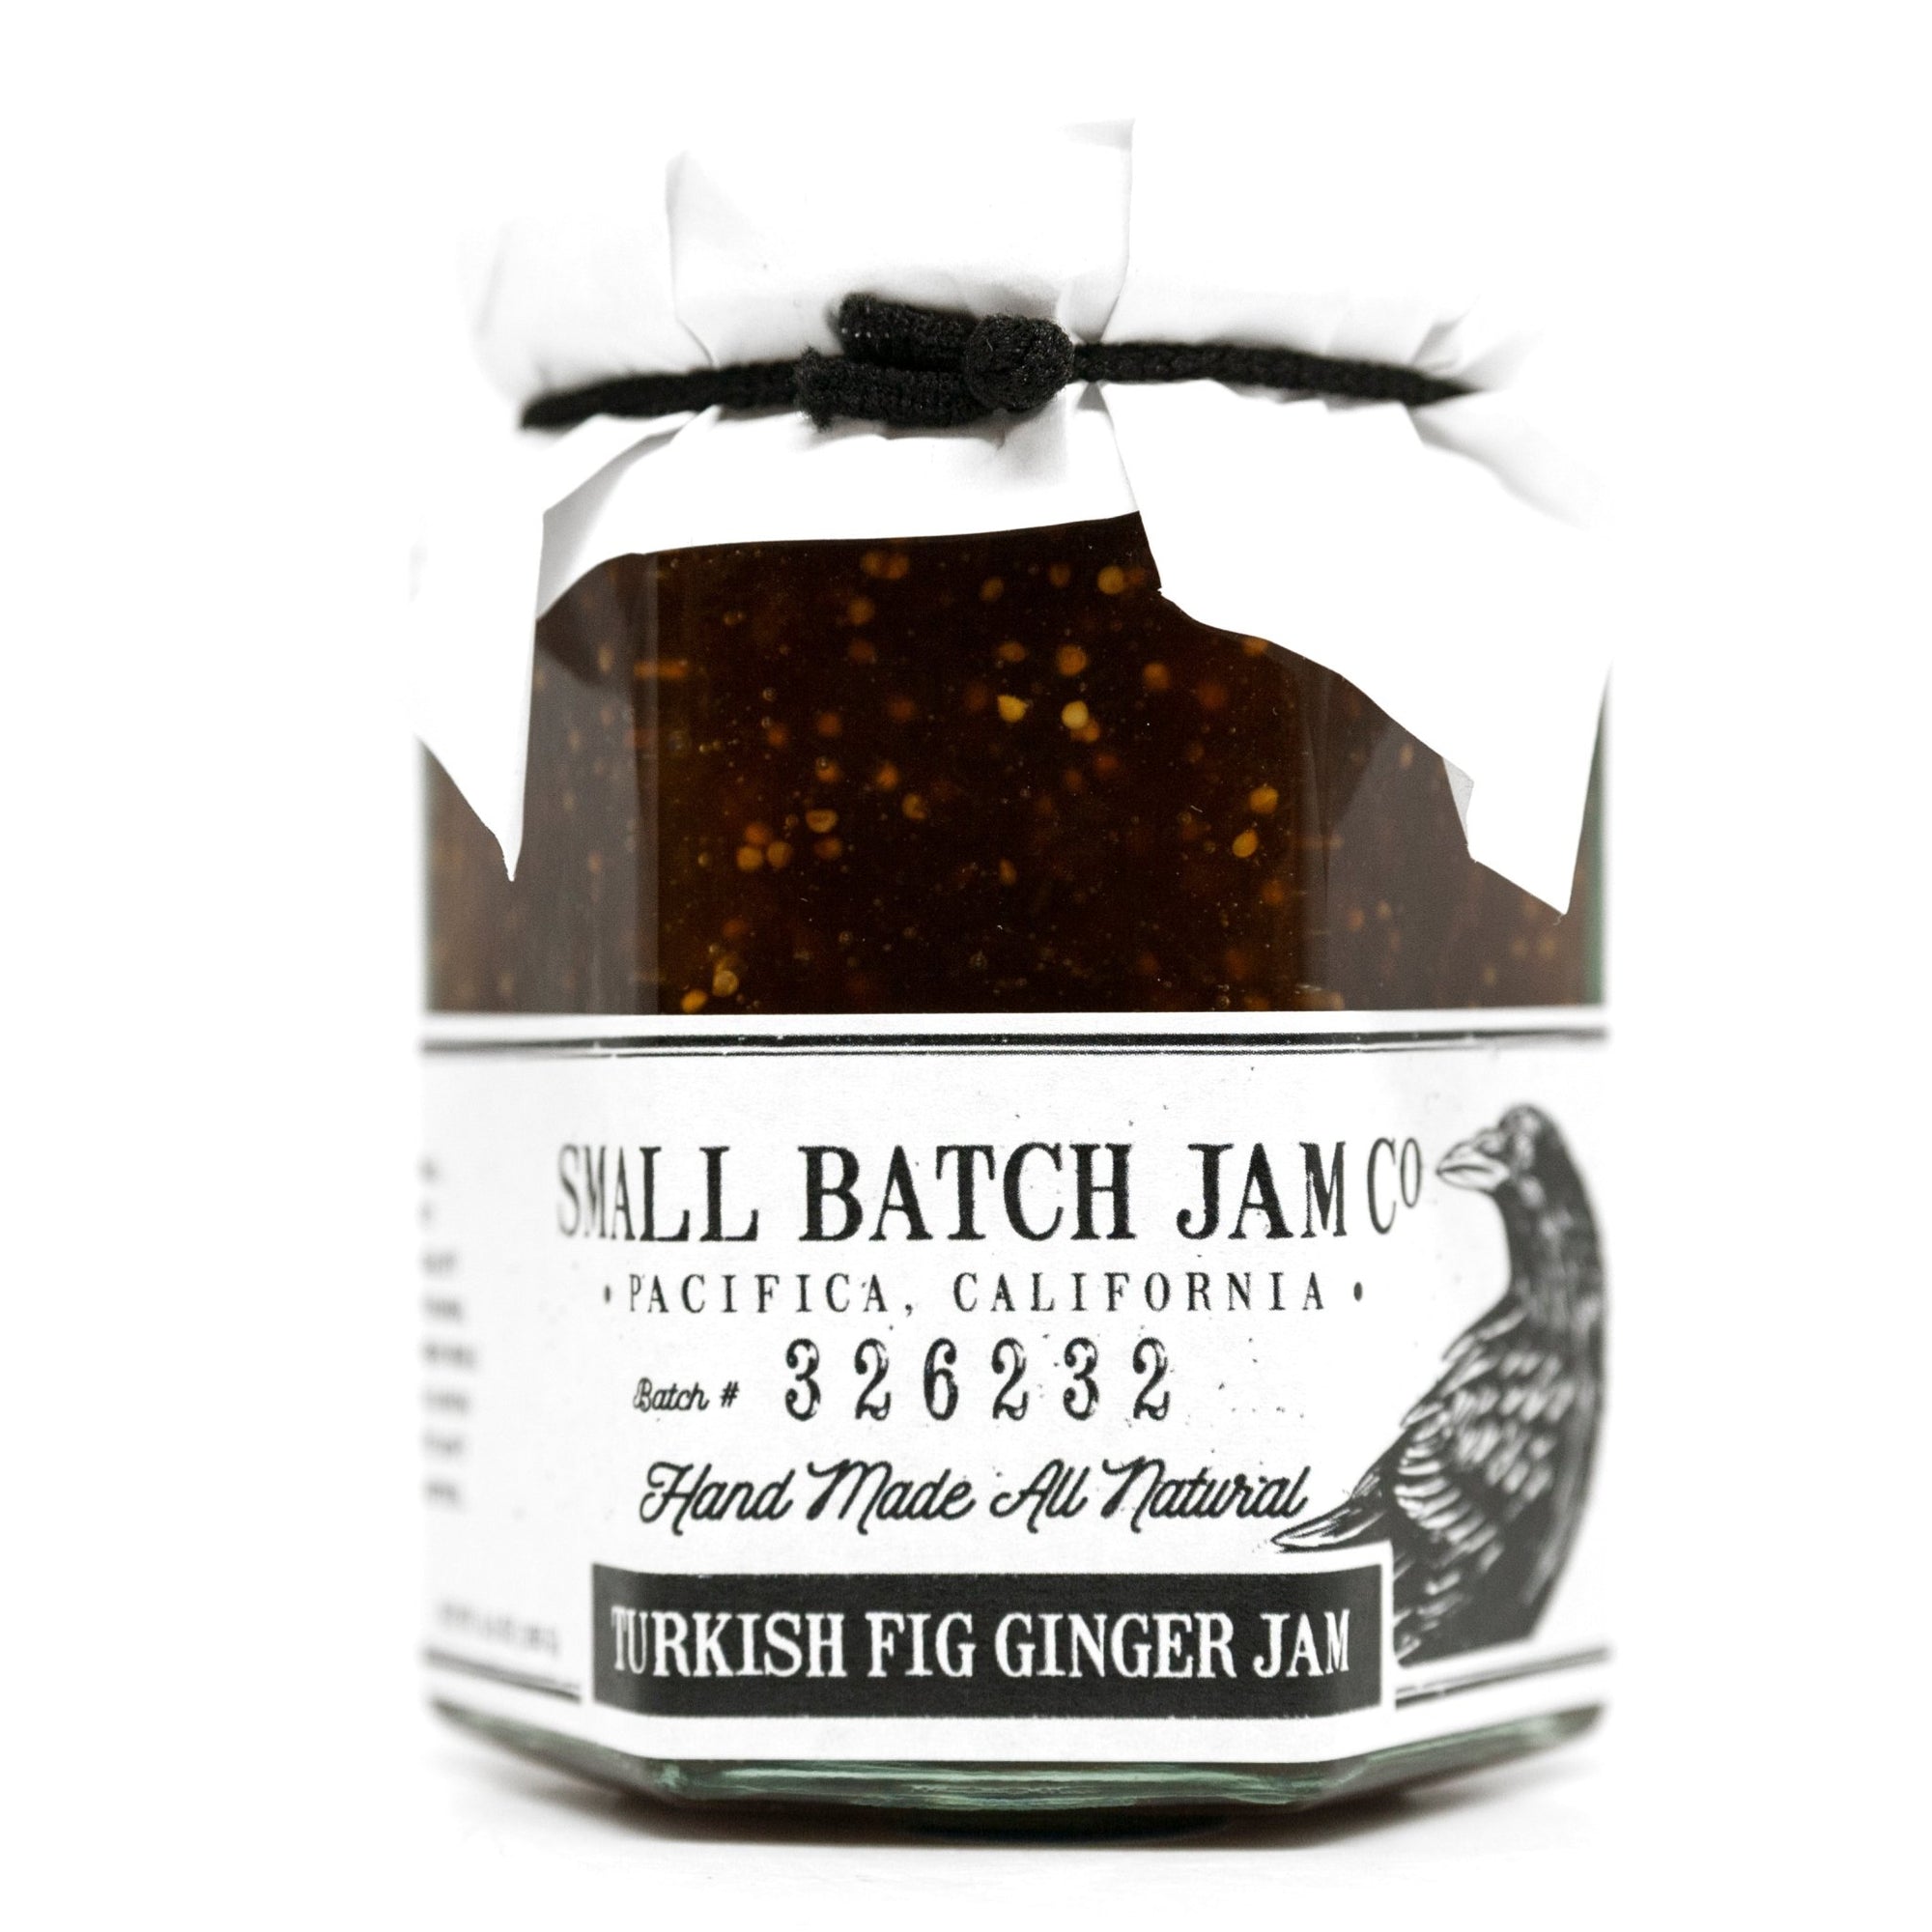 Turkish Fig Ginger Jam - Small Batch Jam Co